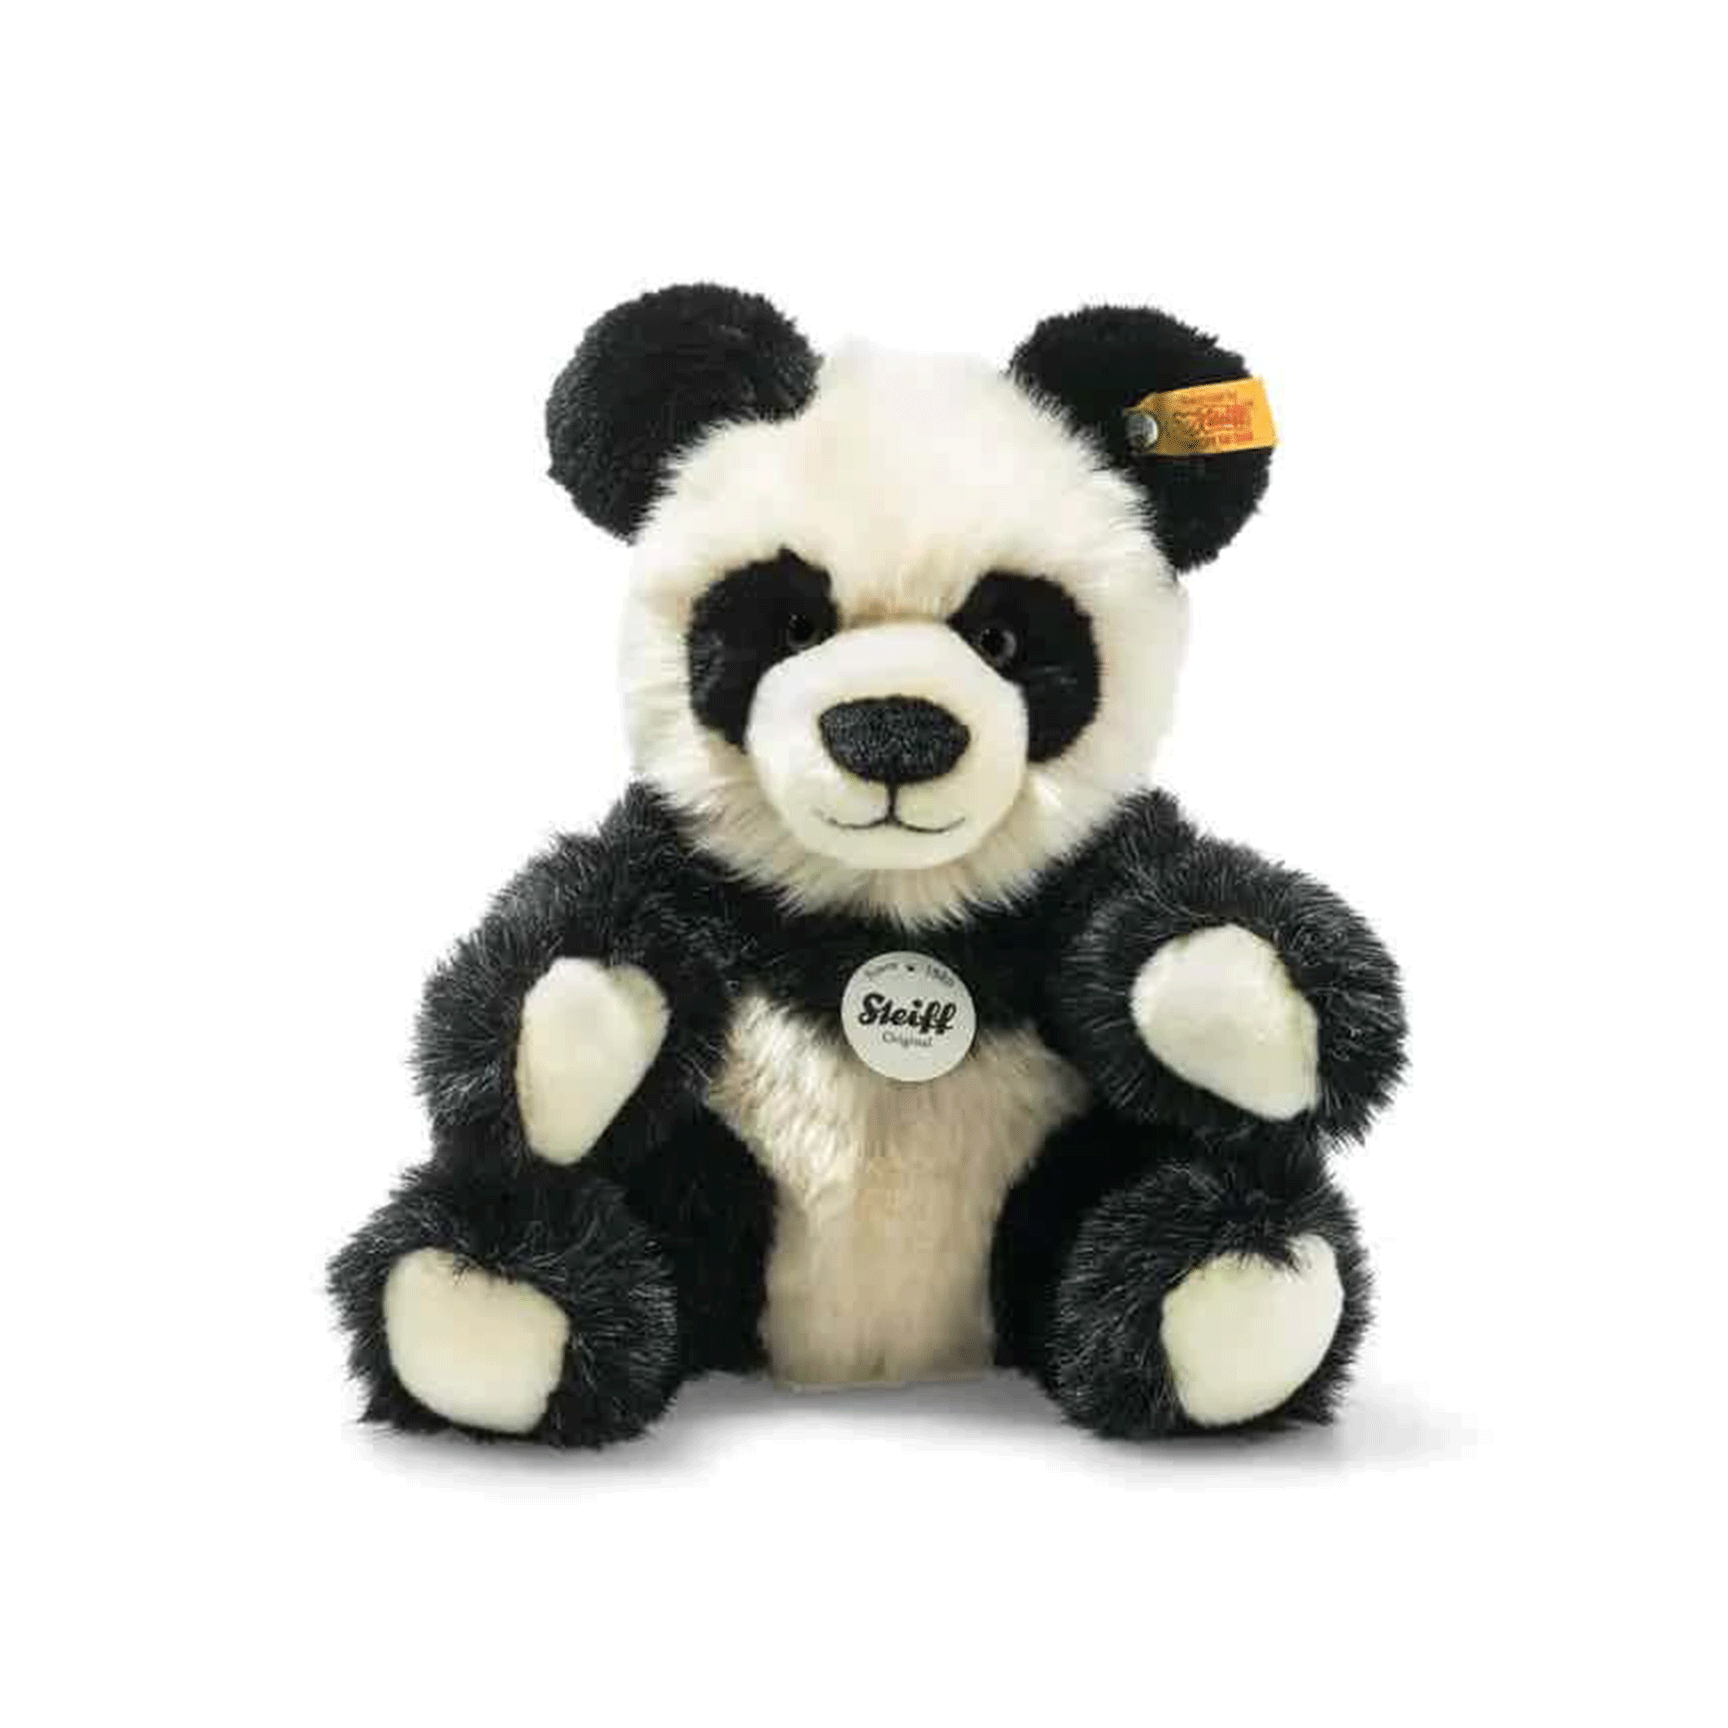 Steiff Manschli Panda Teddy Bears 60021